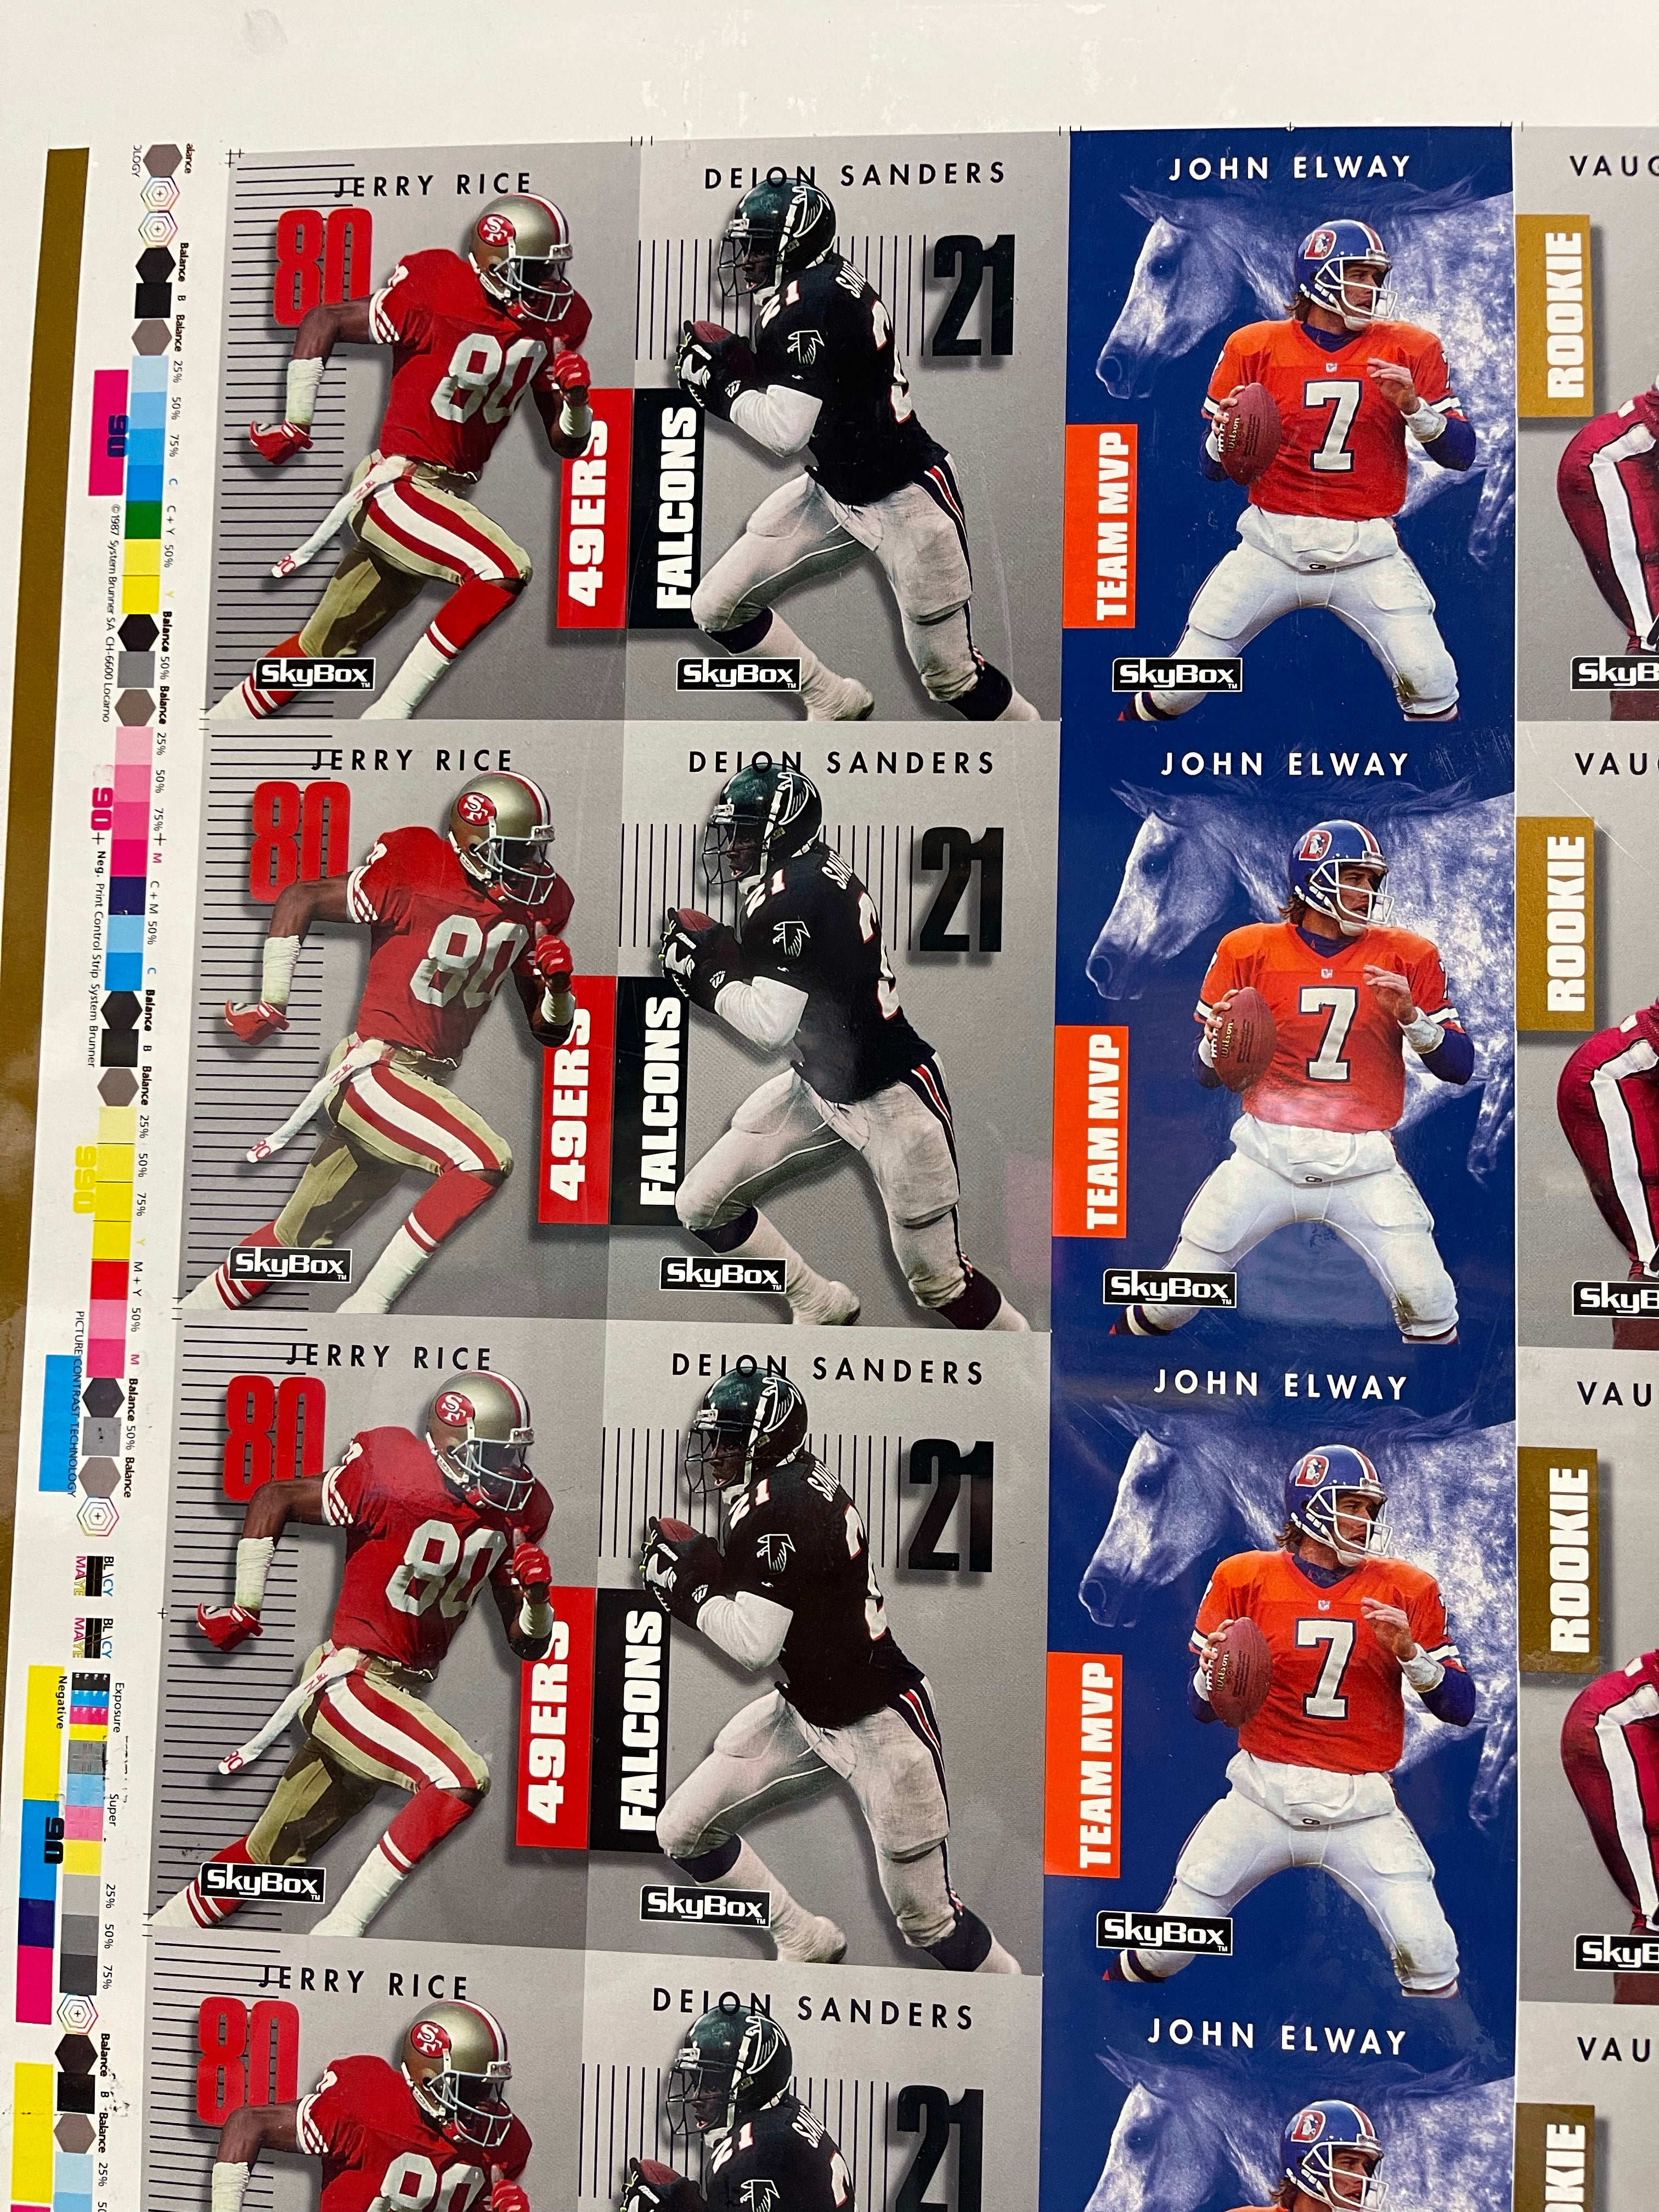 NFL skybox Football star cards rare uncut matted sheet 1992